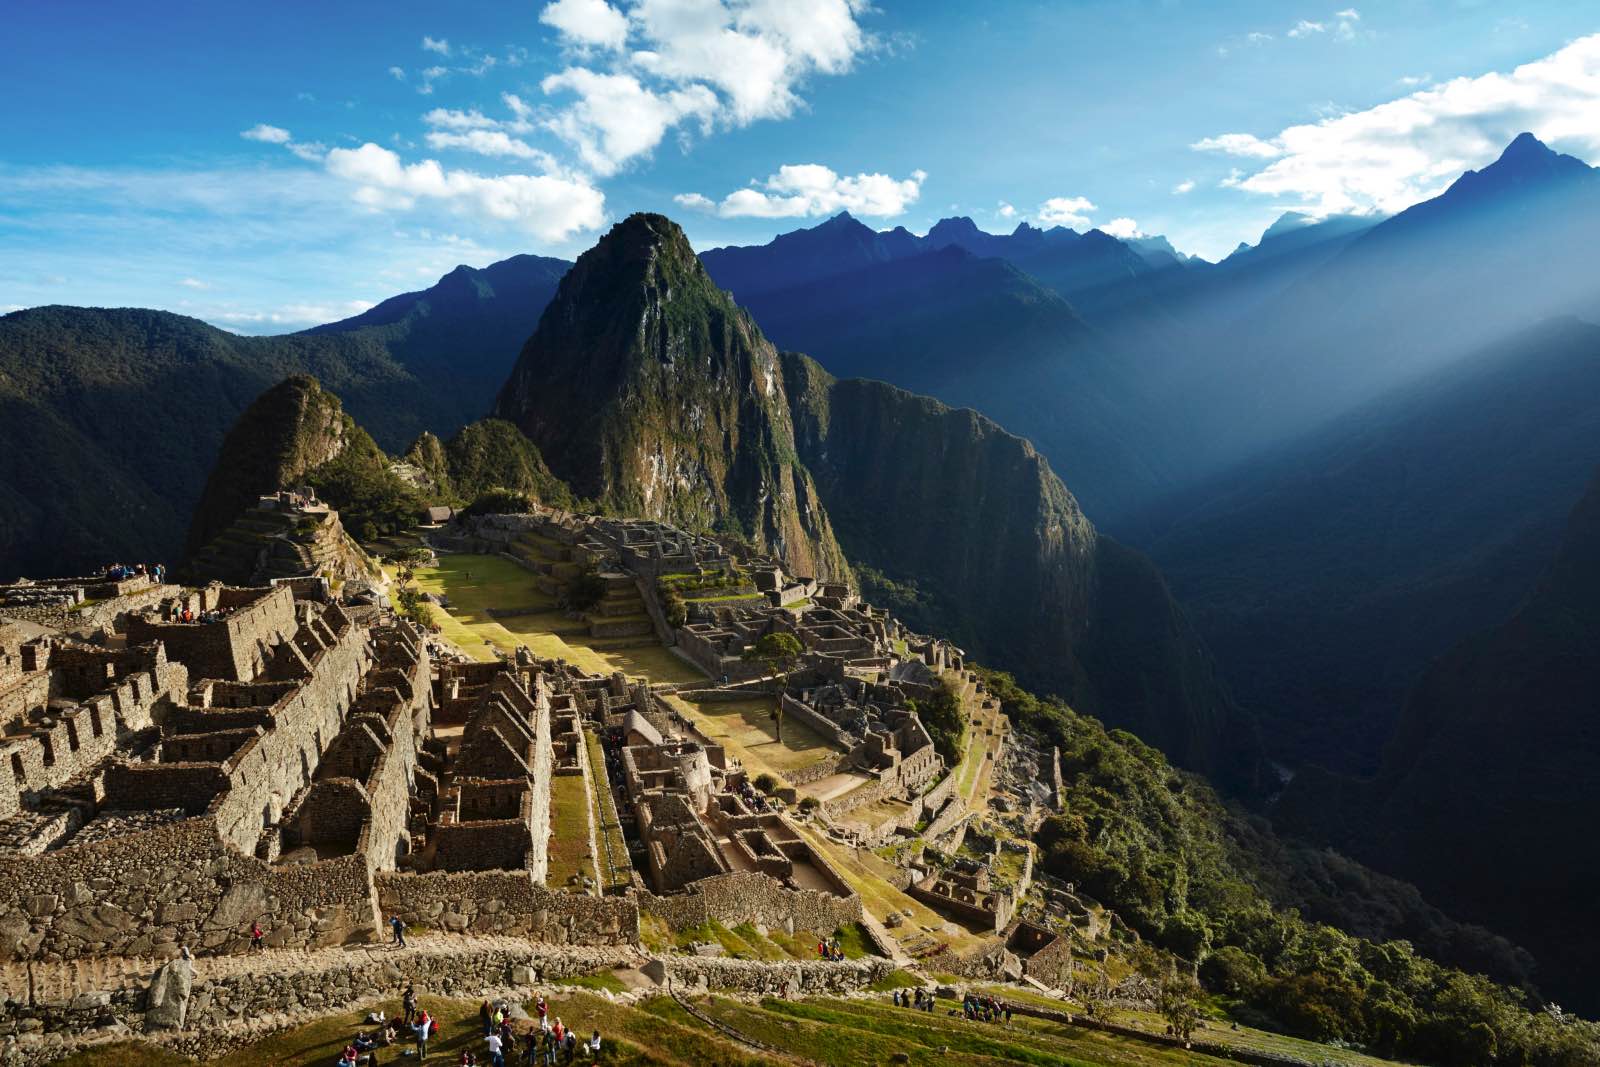 The age old Inca Empire of Machu Picchu